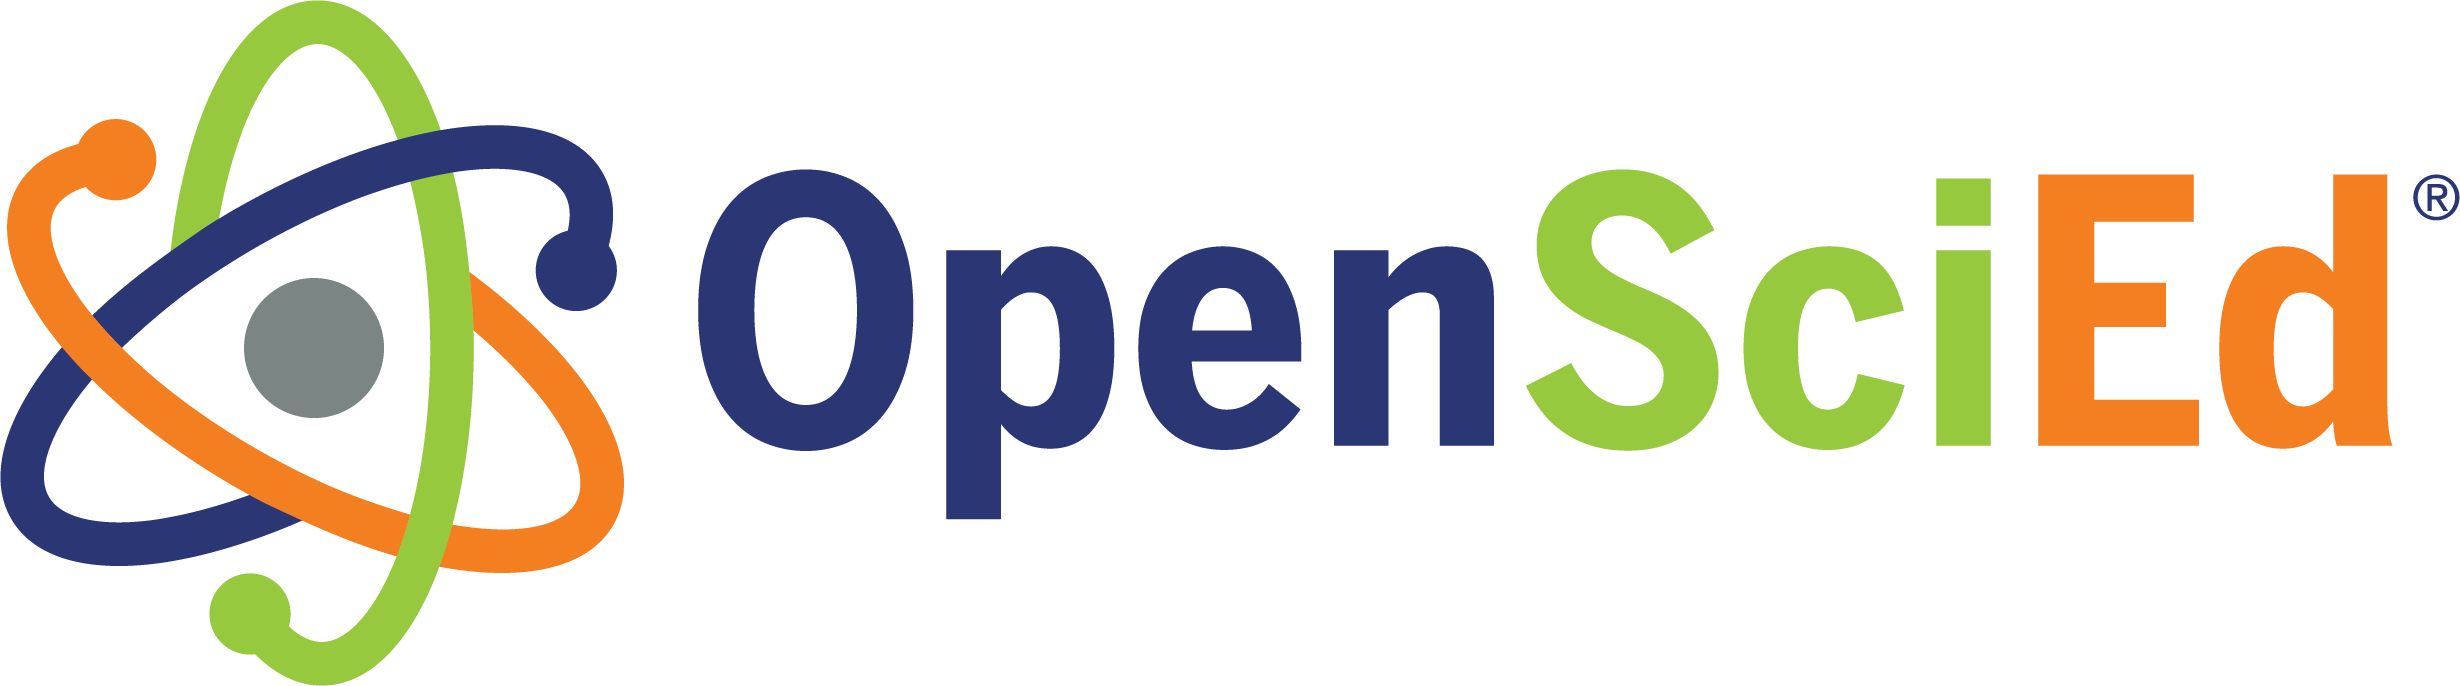 openscied logo